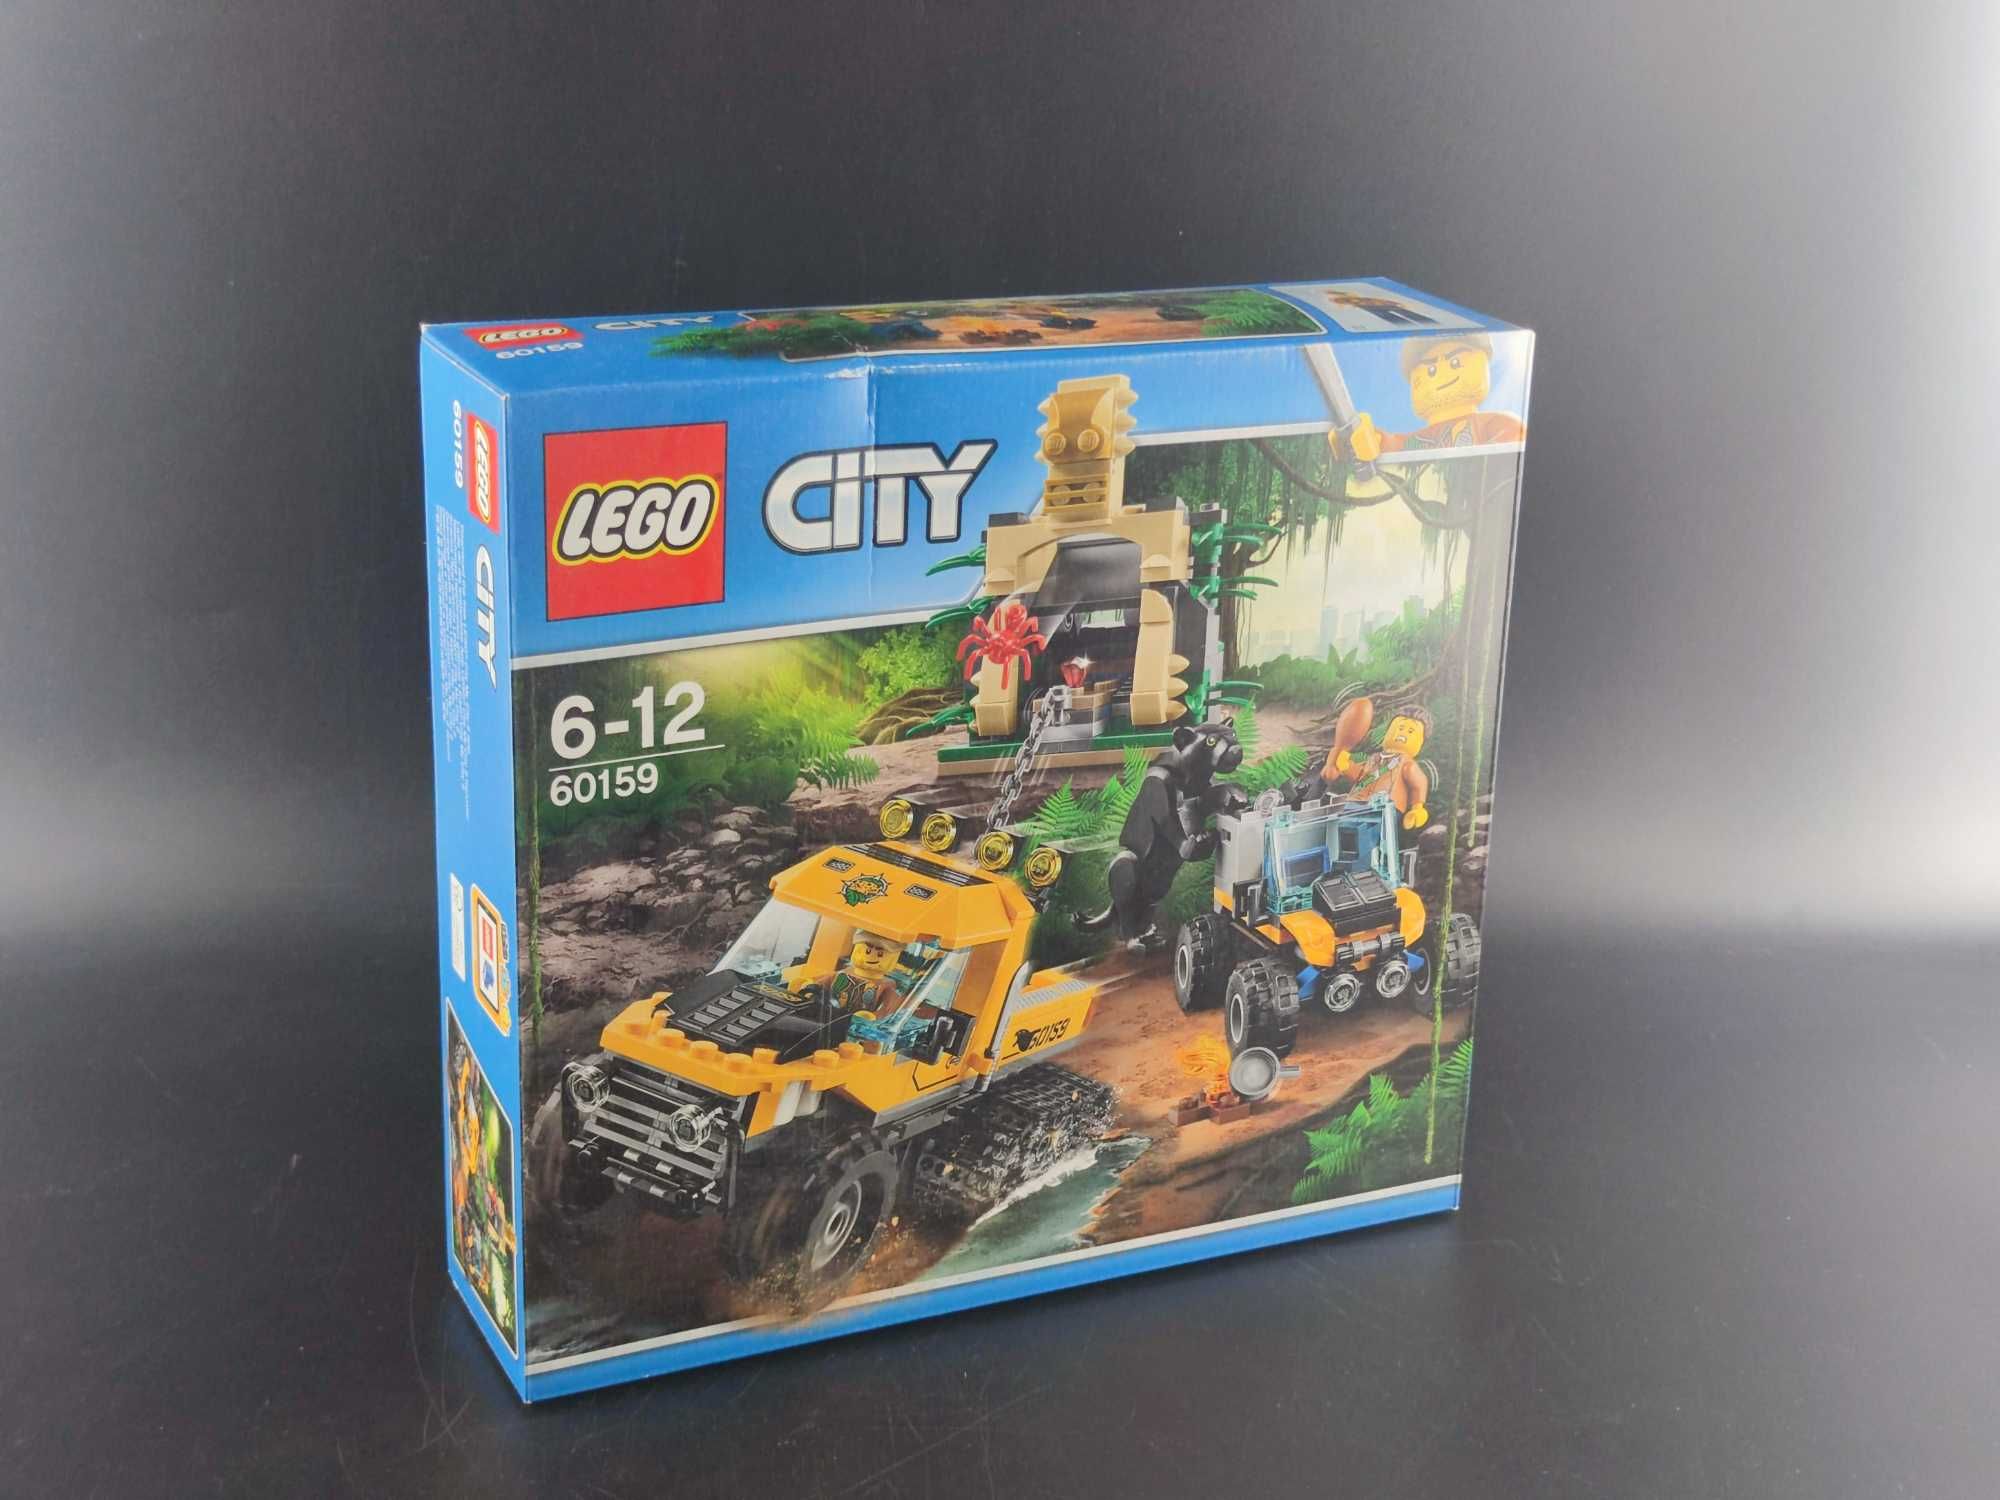 LEGO City 60159 Jungle Explorers Misja - Nowy Oryg Zapakowany